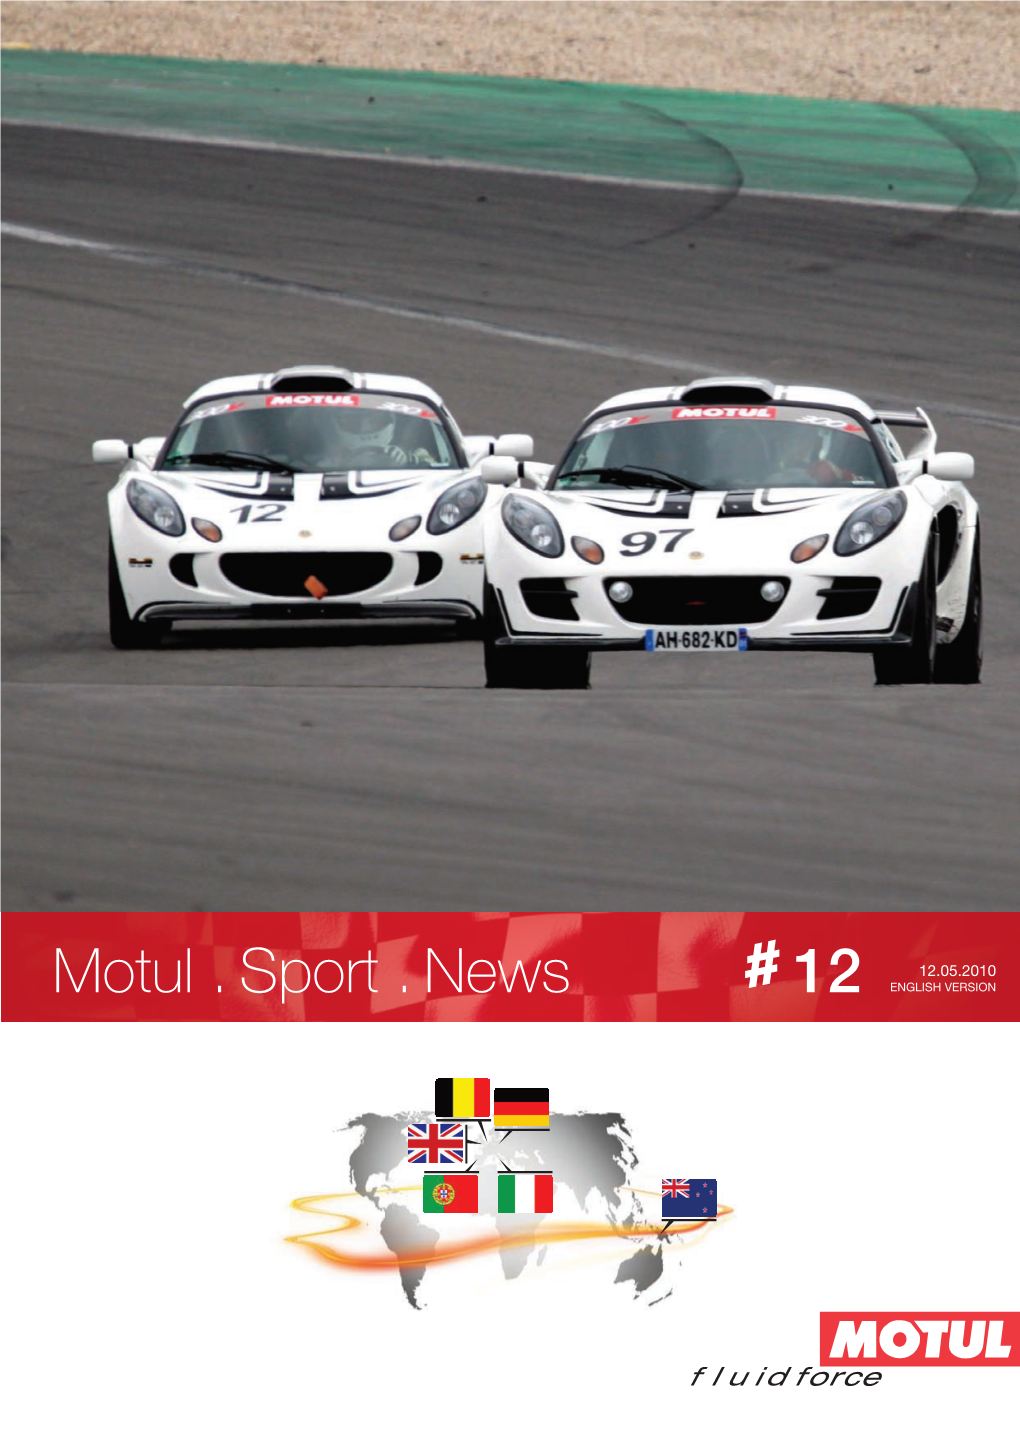 Motul . Sport . News 12